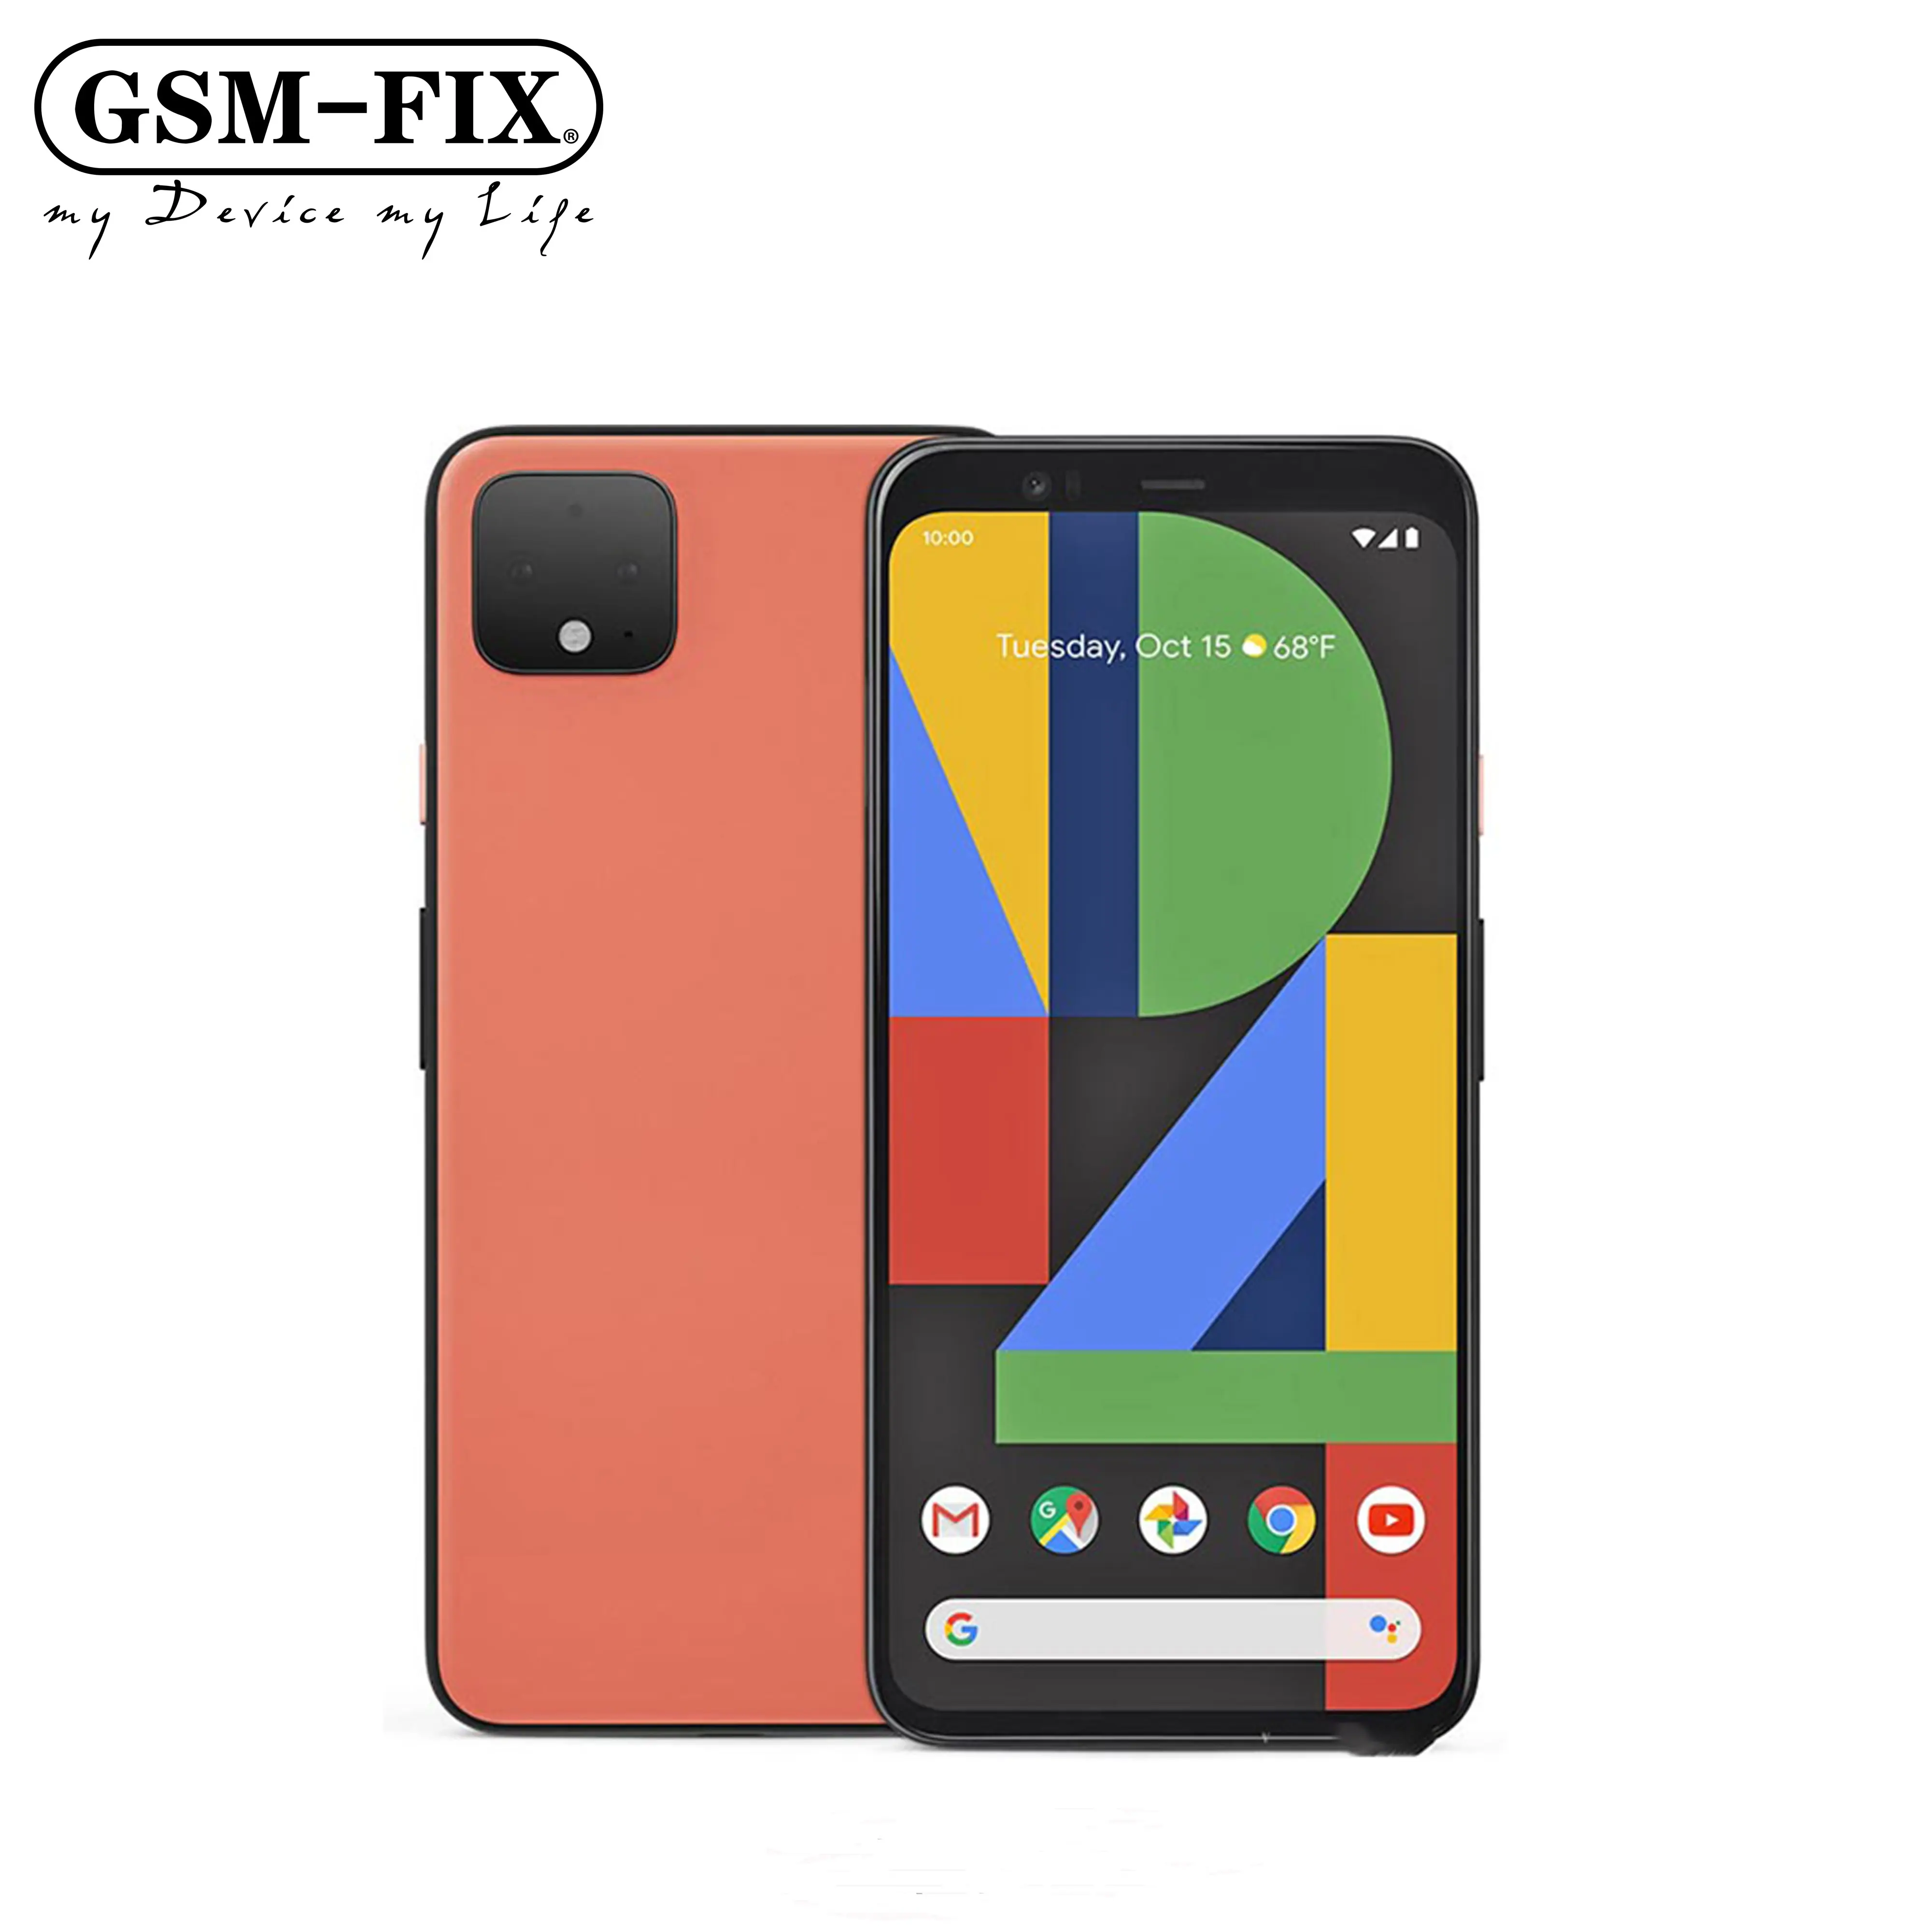 GSM-FIX marka orijinal 5.7 inç Smartphone için Google telefon 6 + 64GB orijinal Celulares cep telefonu Google Pixel için 4